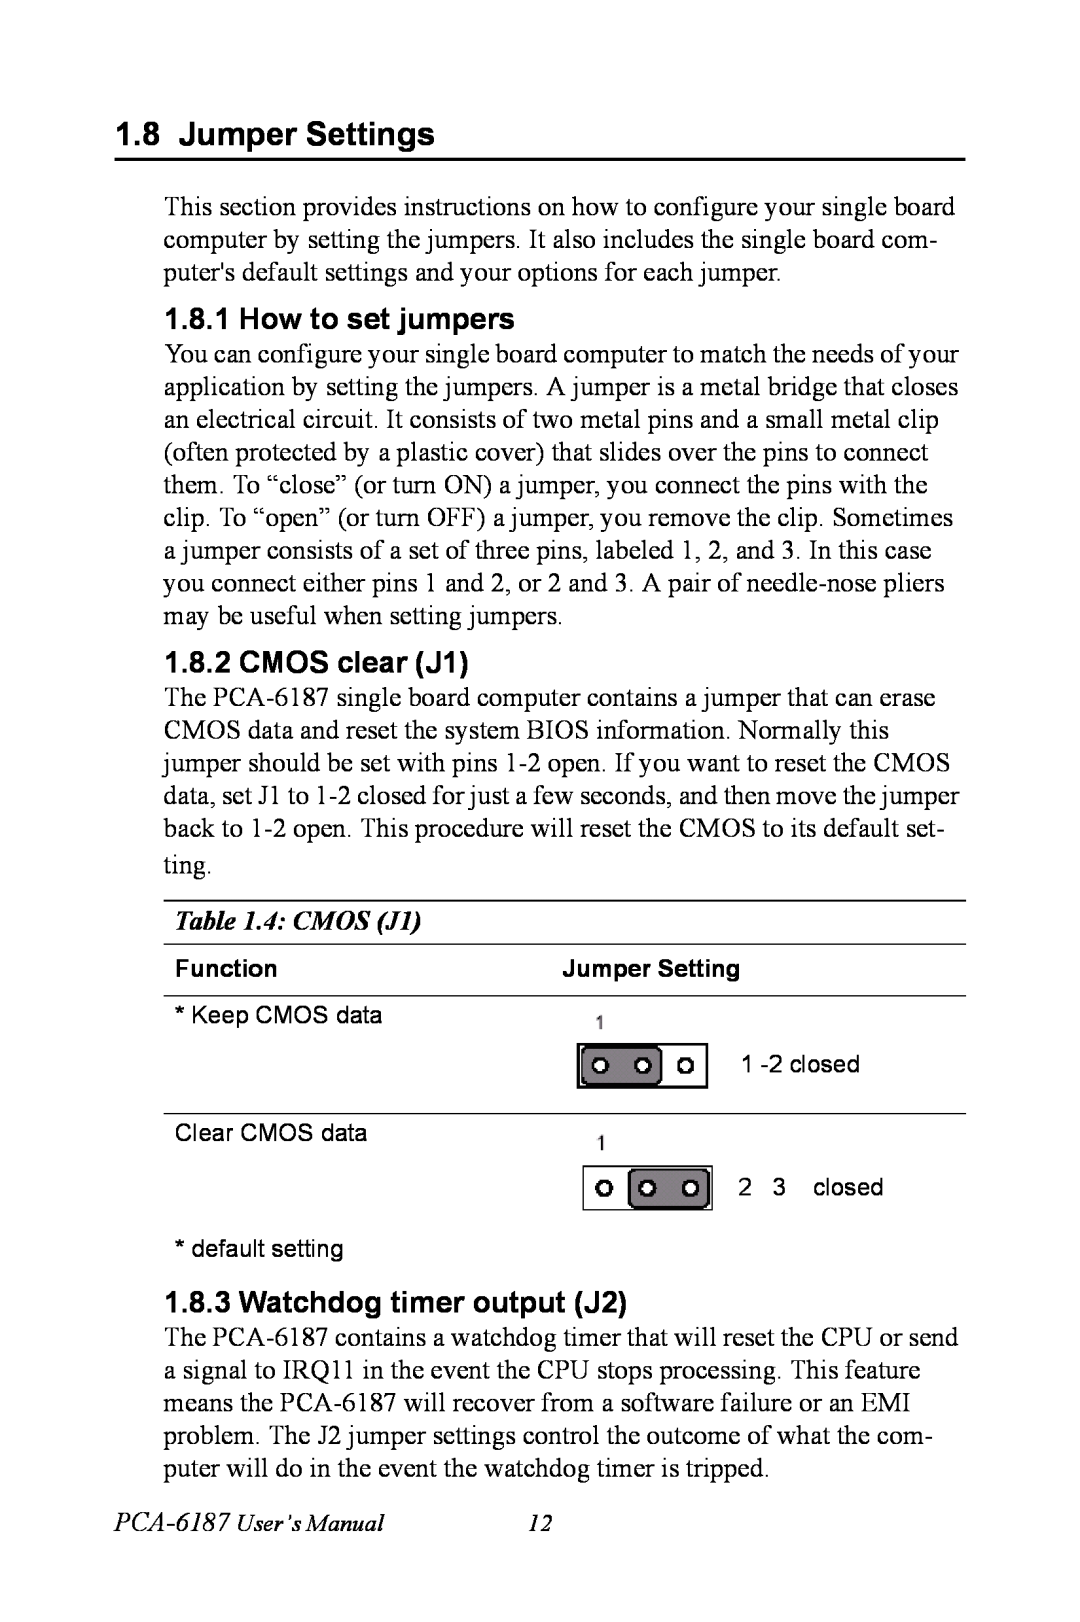 Advantech PCA-6187 user manual Jumper Settings, How to set jumpers, CMOS clear J1, Watchdog timer output J2, 4 CMOS J1 